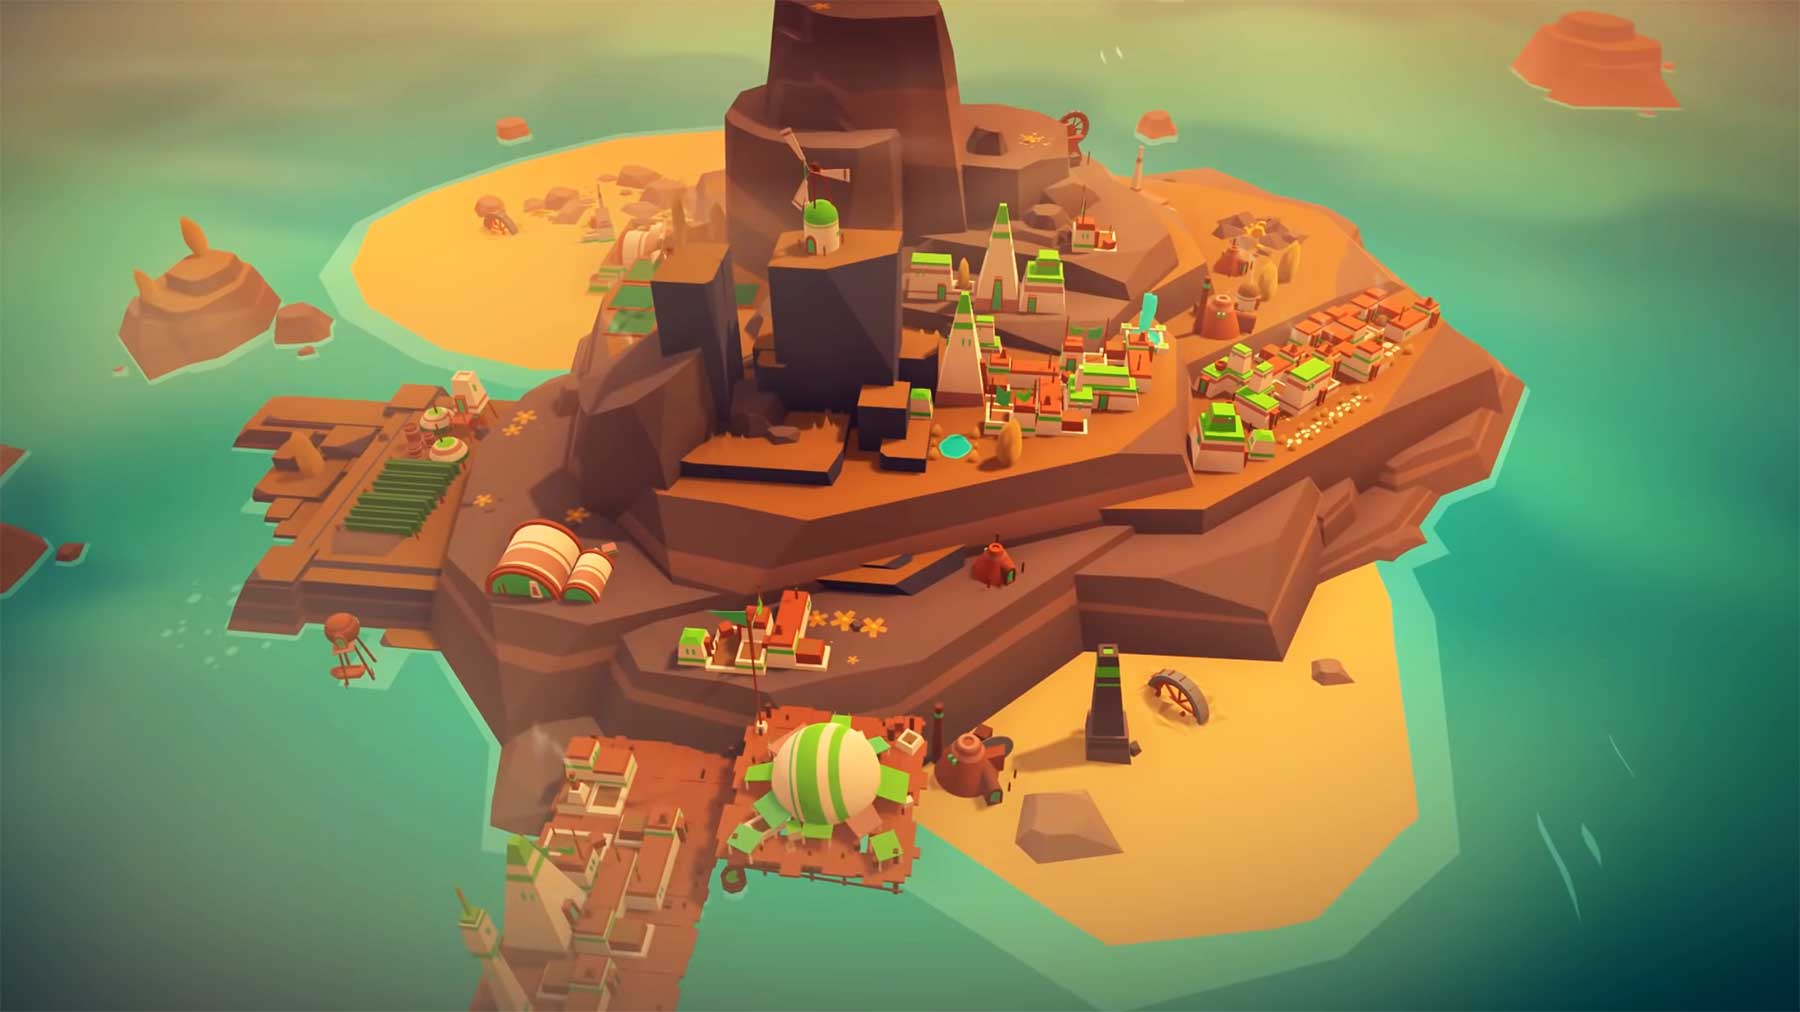 Minimalistische Städtebau-Simulation: "ISLANDERS" islanders-game-trailer 